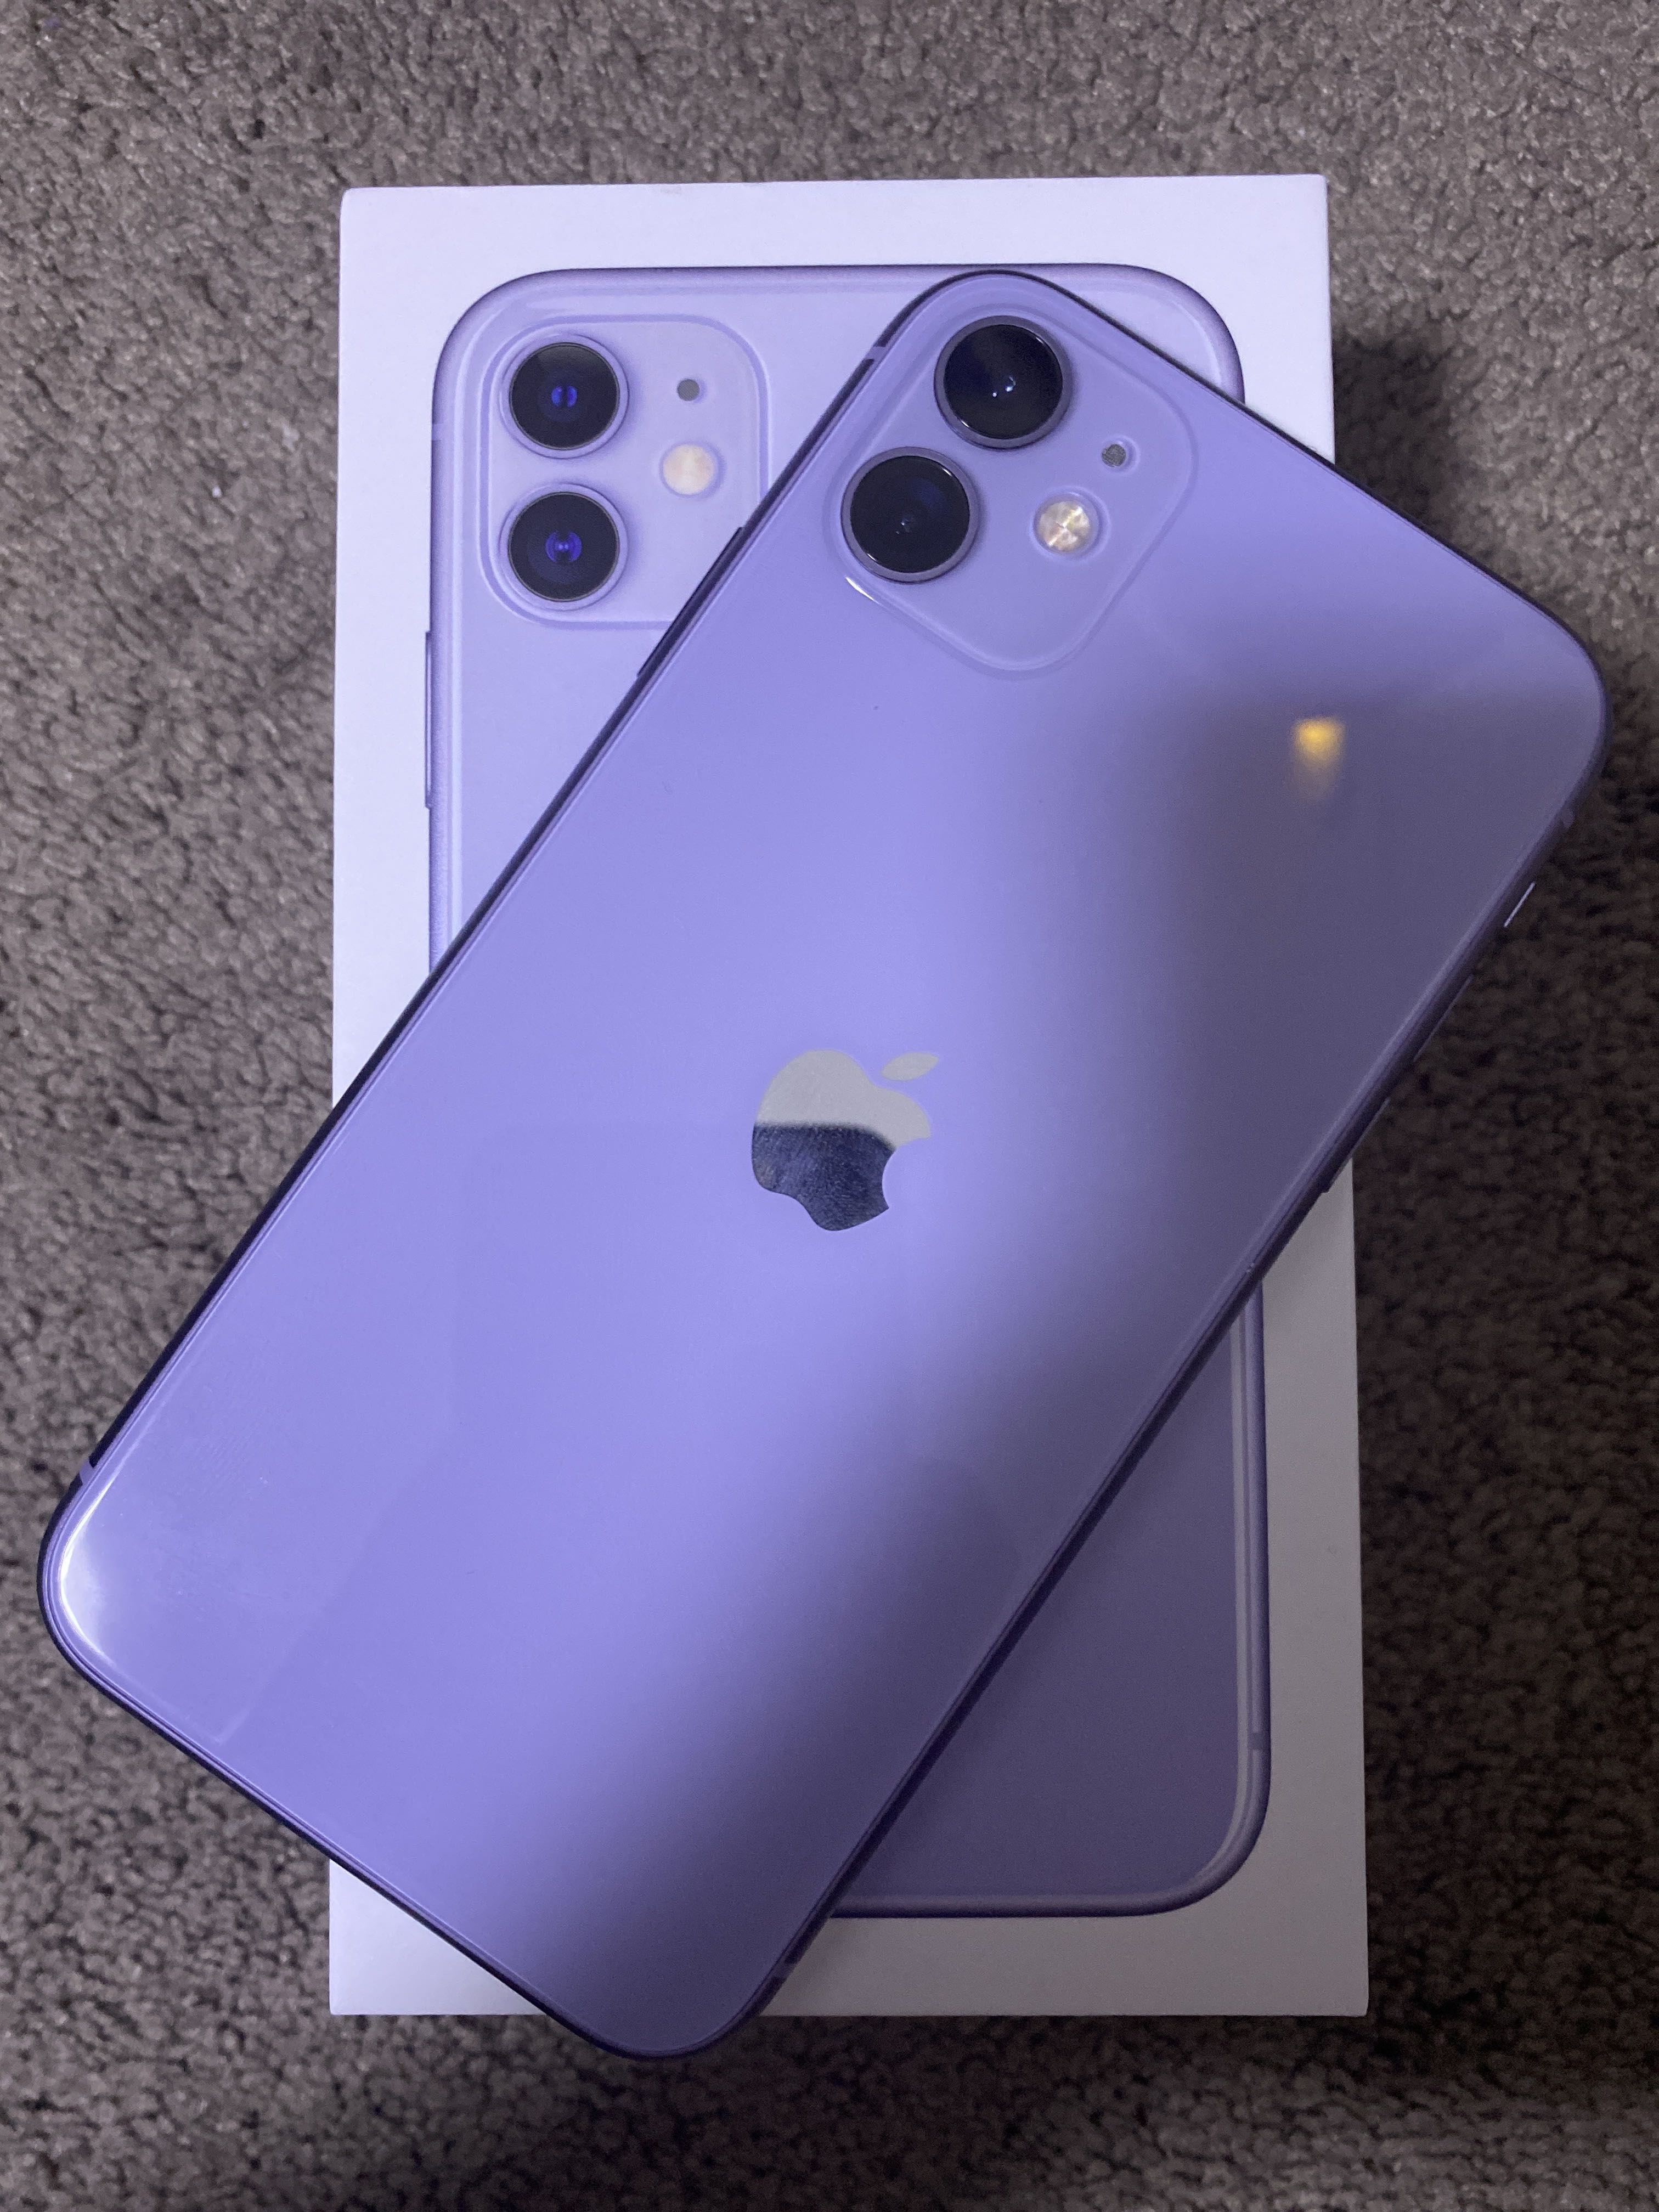 IPhone 11 256gb purple, Mobile Phones & Gadgets, Mobile Phones